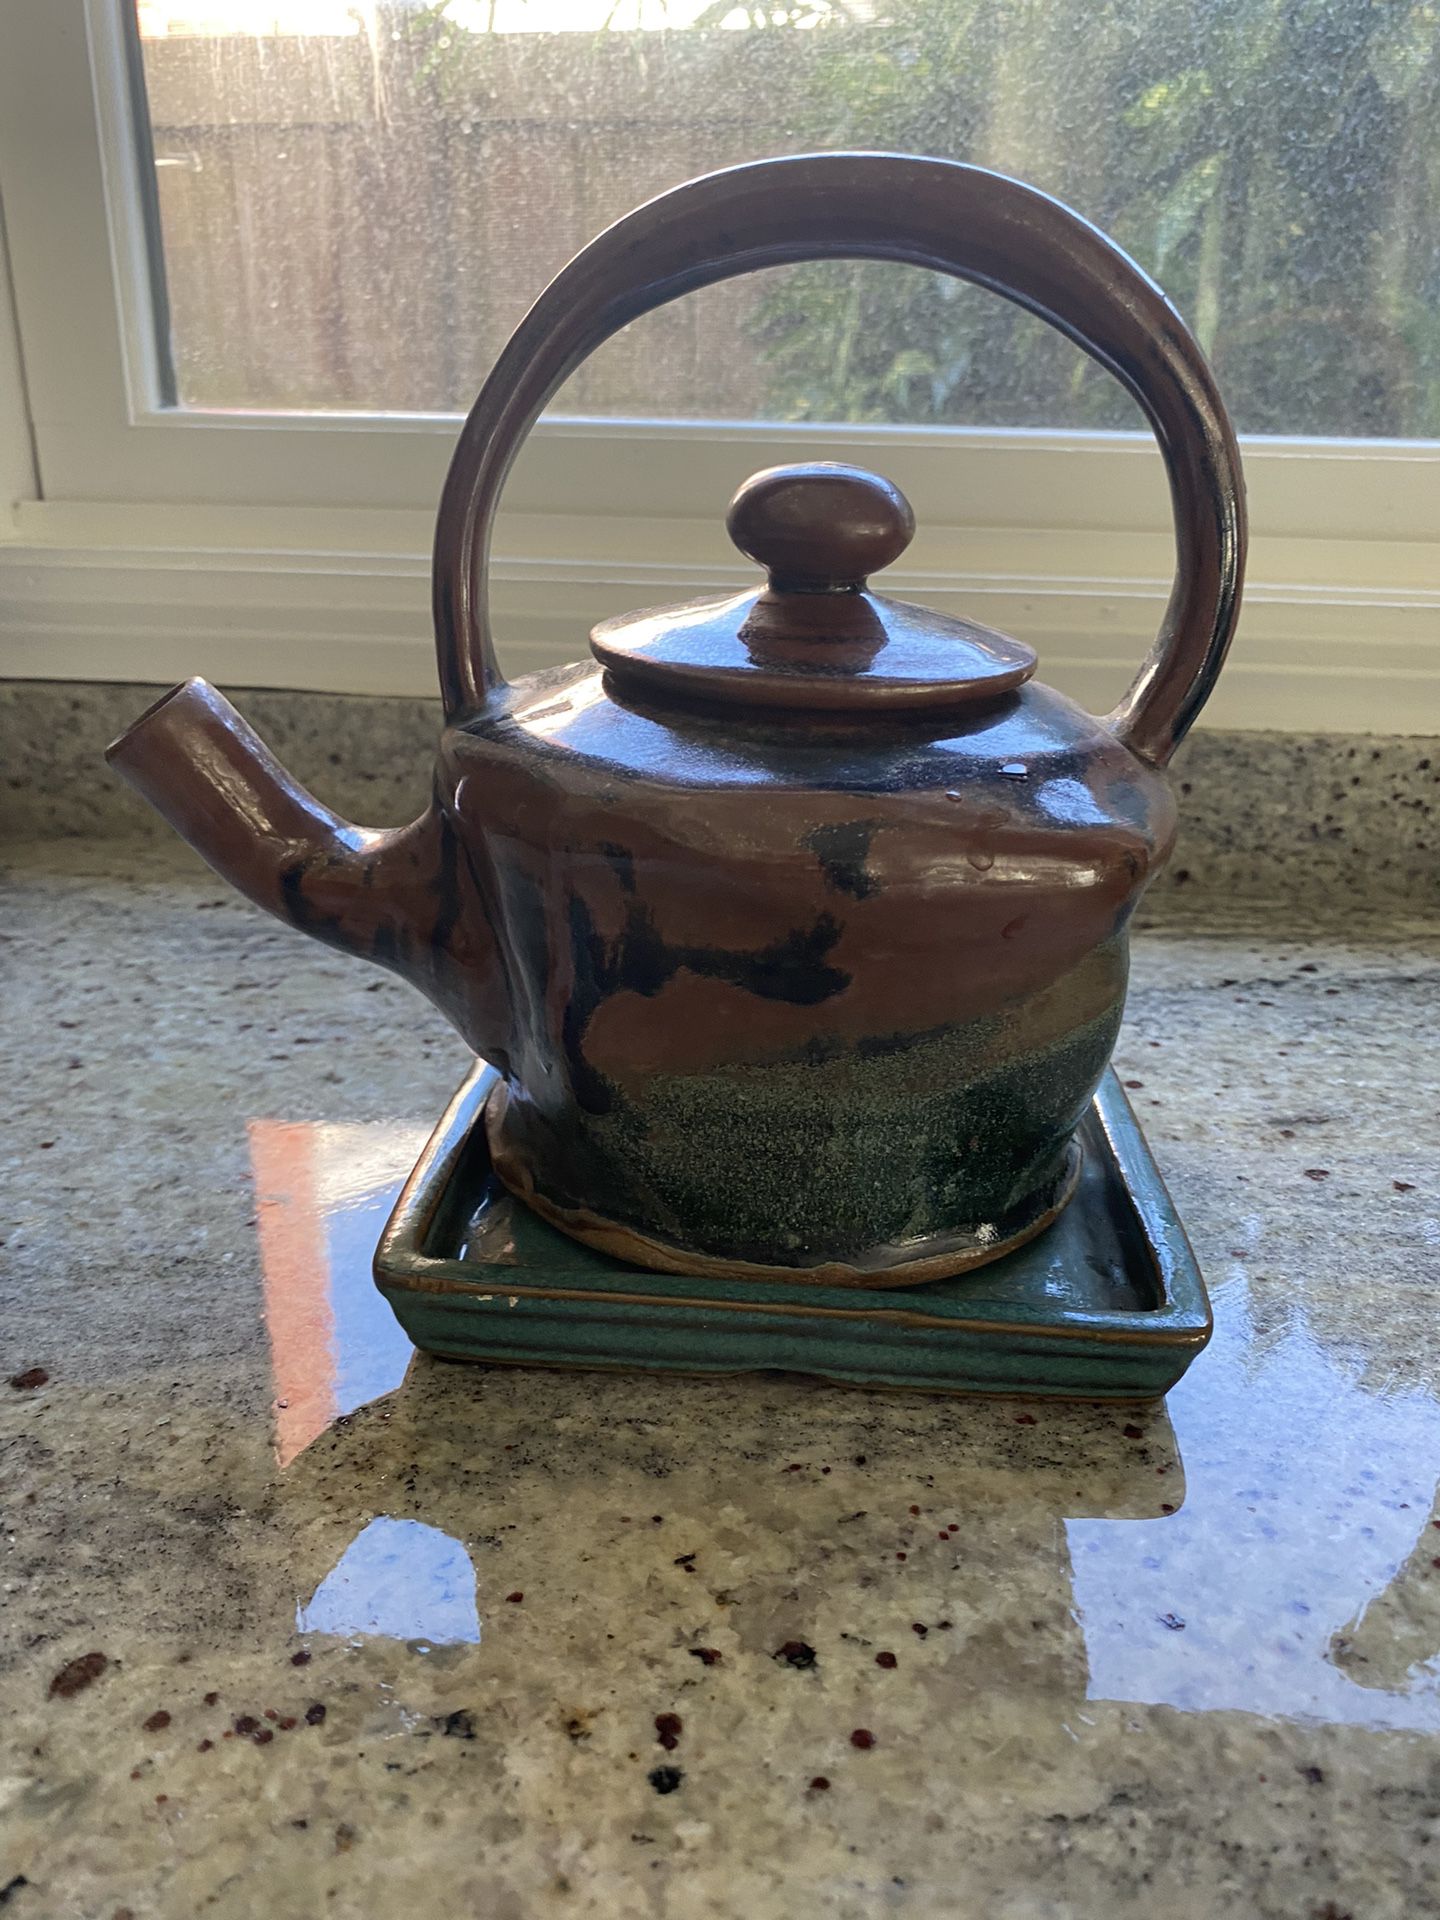 Vintage Tea Pot 